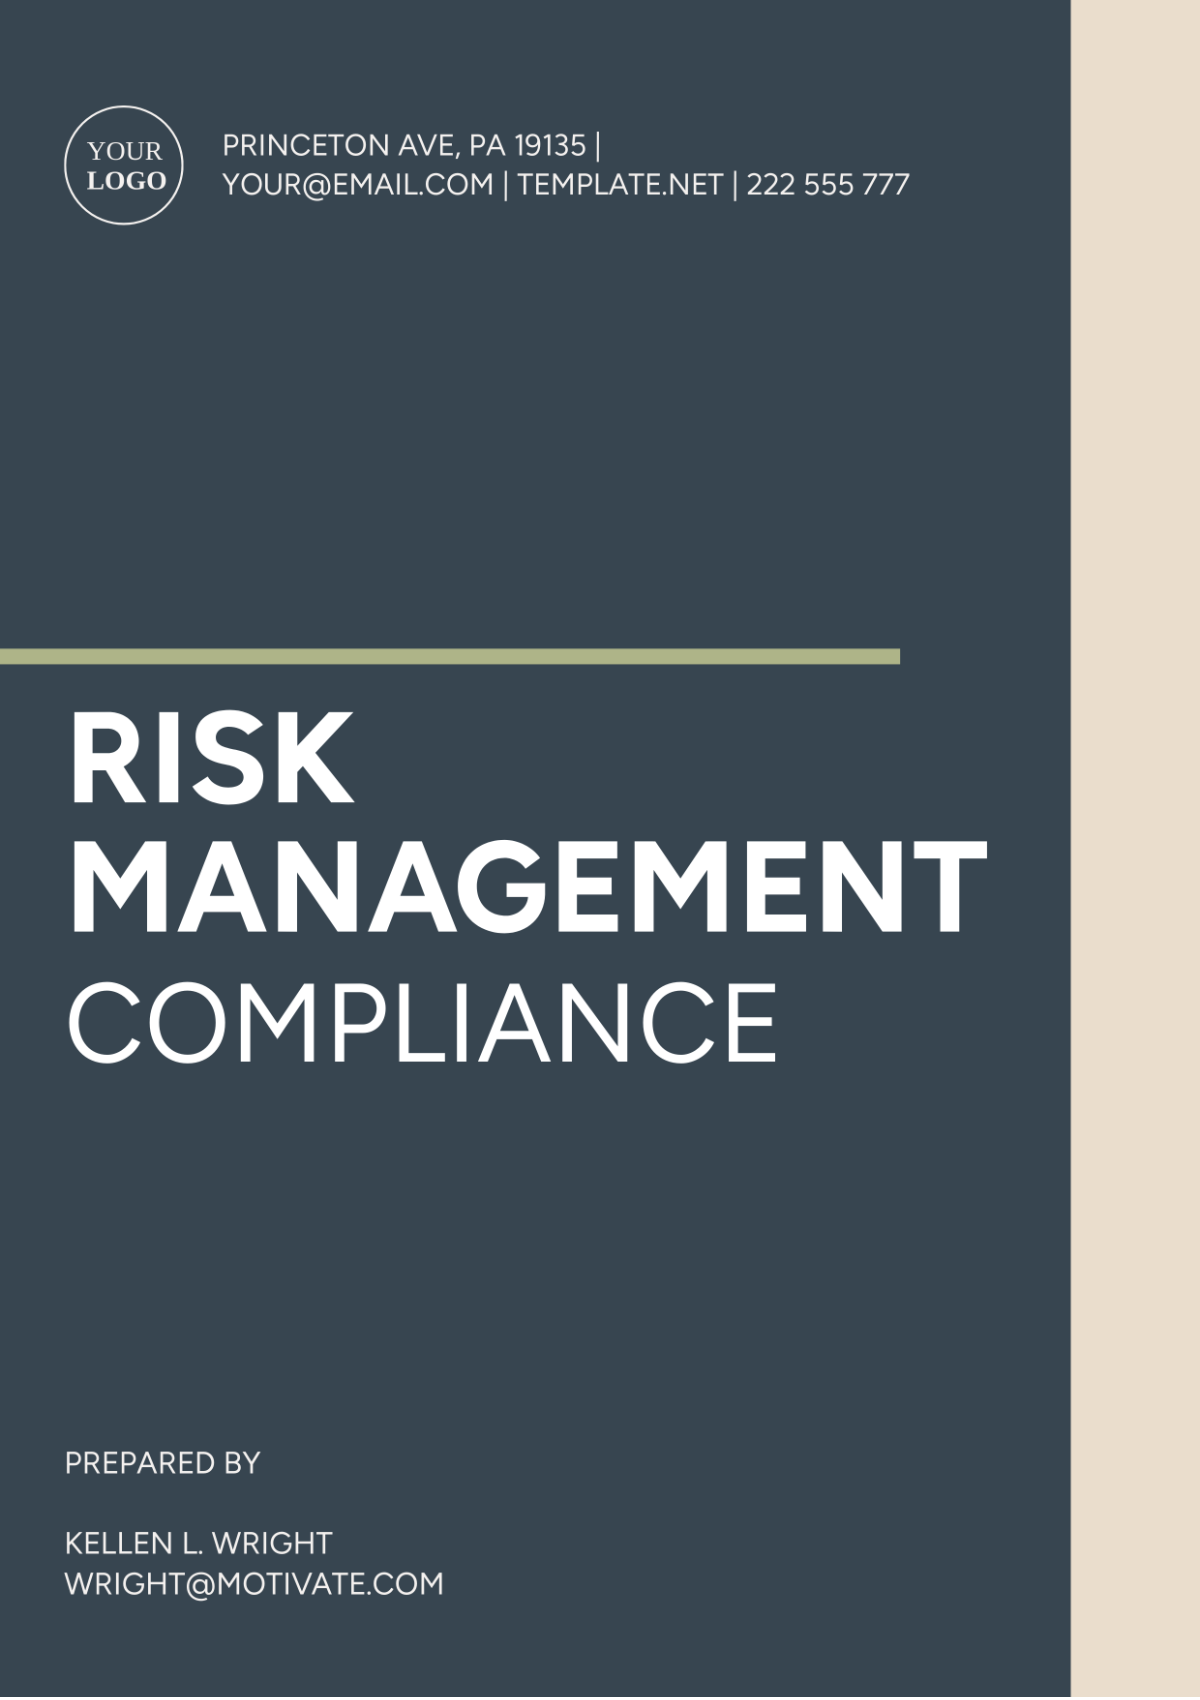 Risk Management Compliance Template